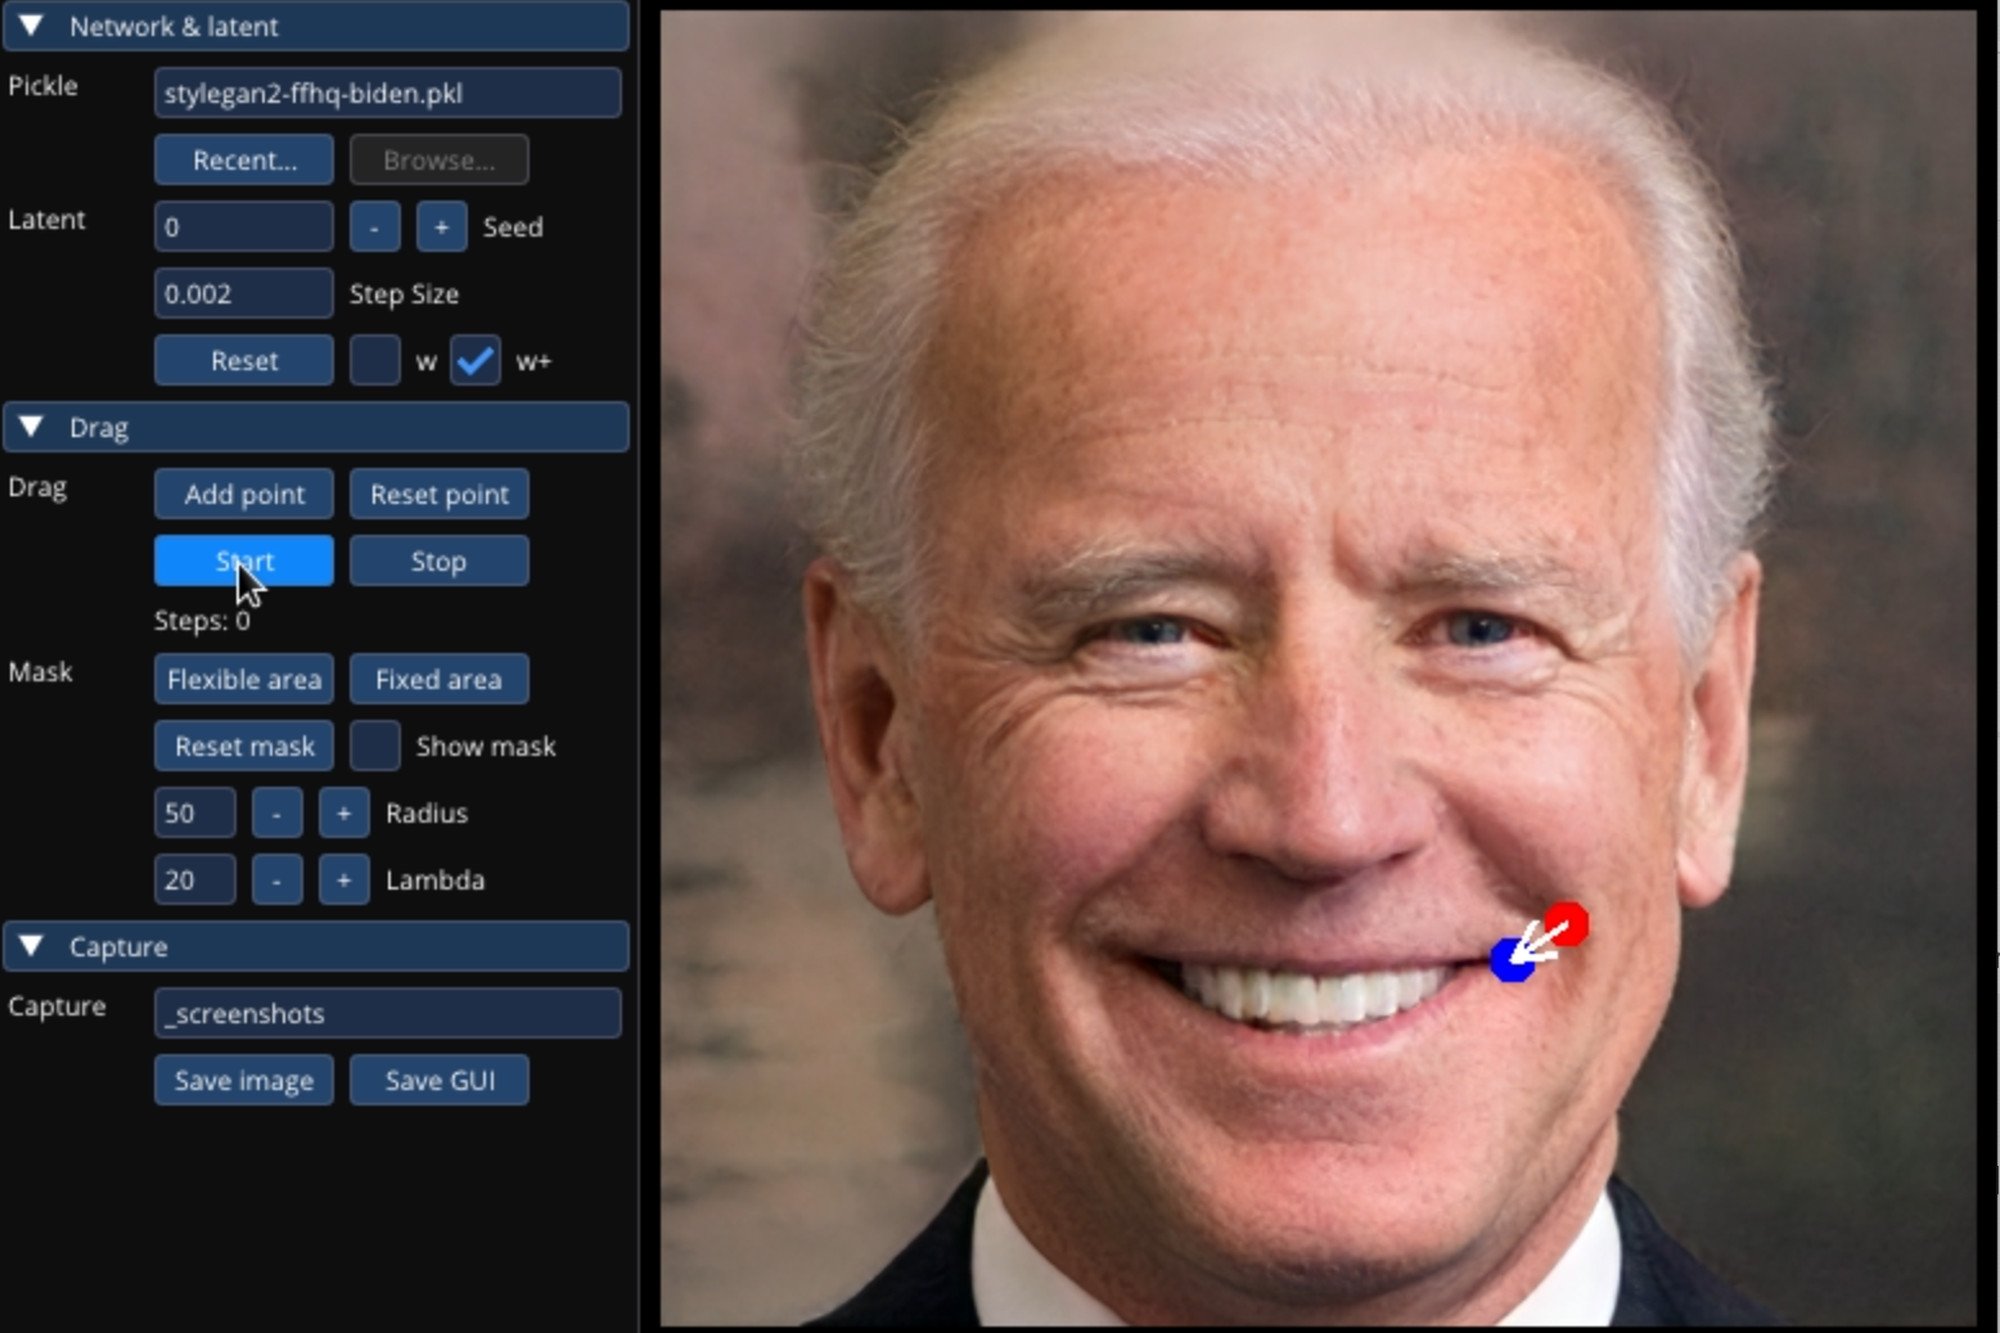 US President Joe Biden’s AI face on DragGAN Editor